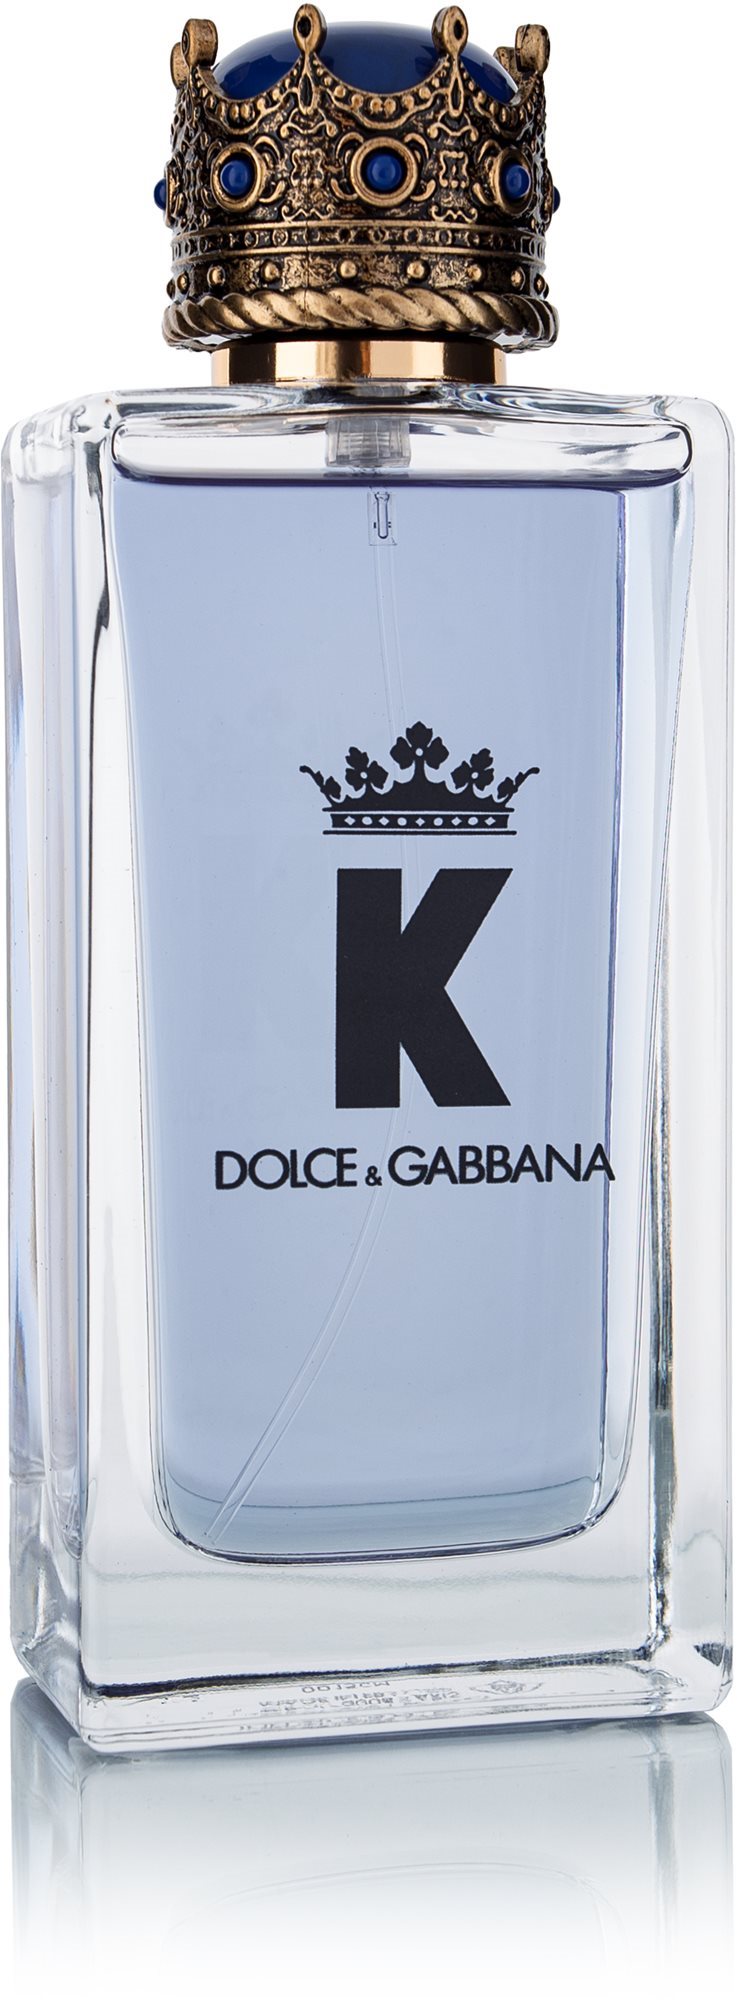 DOLCE & GABBANA K by Dolce & Gabbana EdT